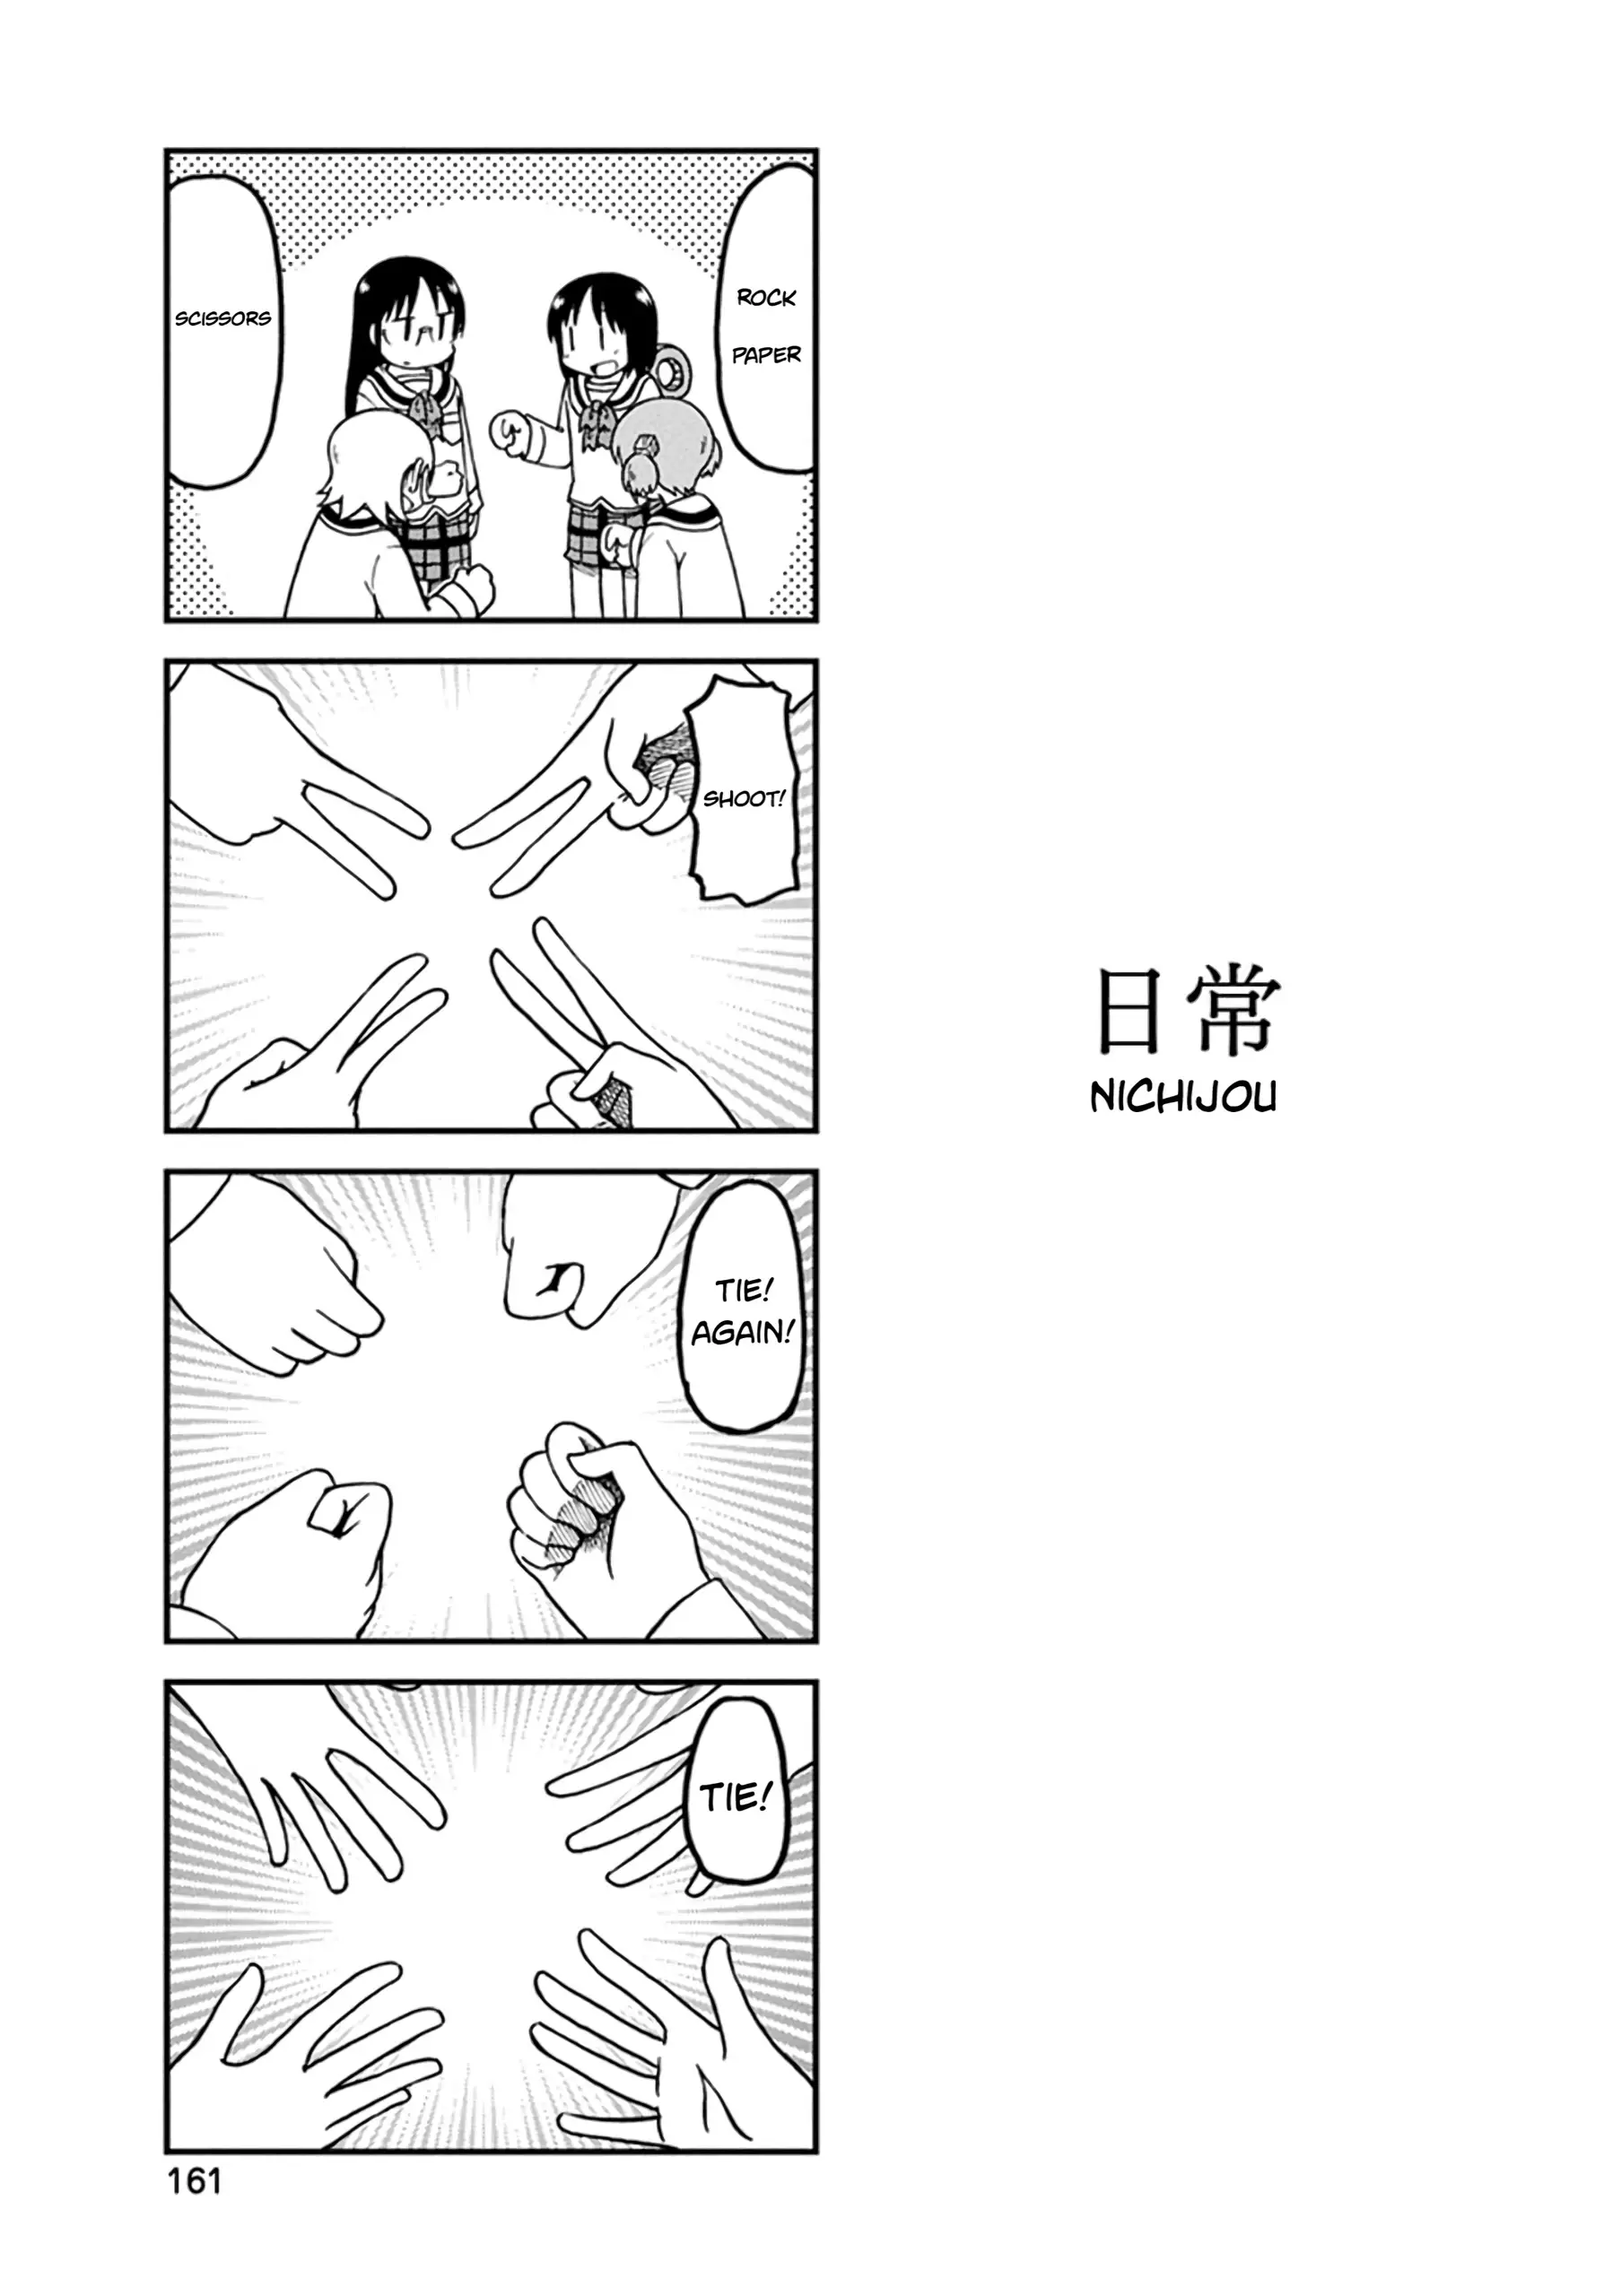 Nichijou - 192 page 11-94708785